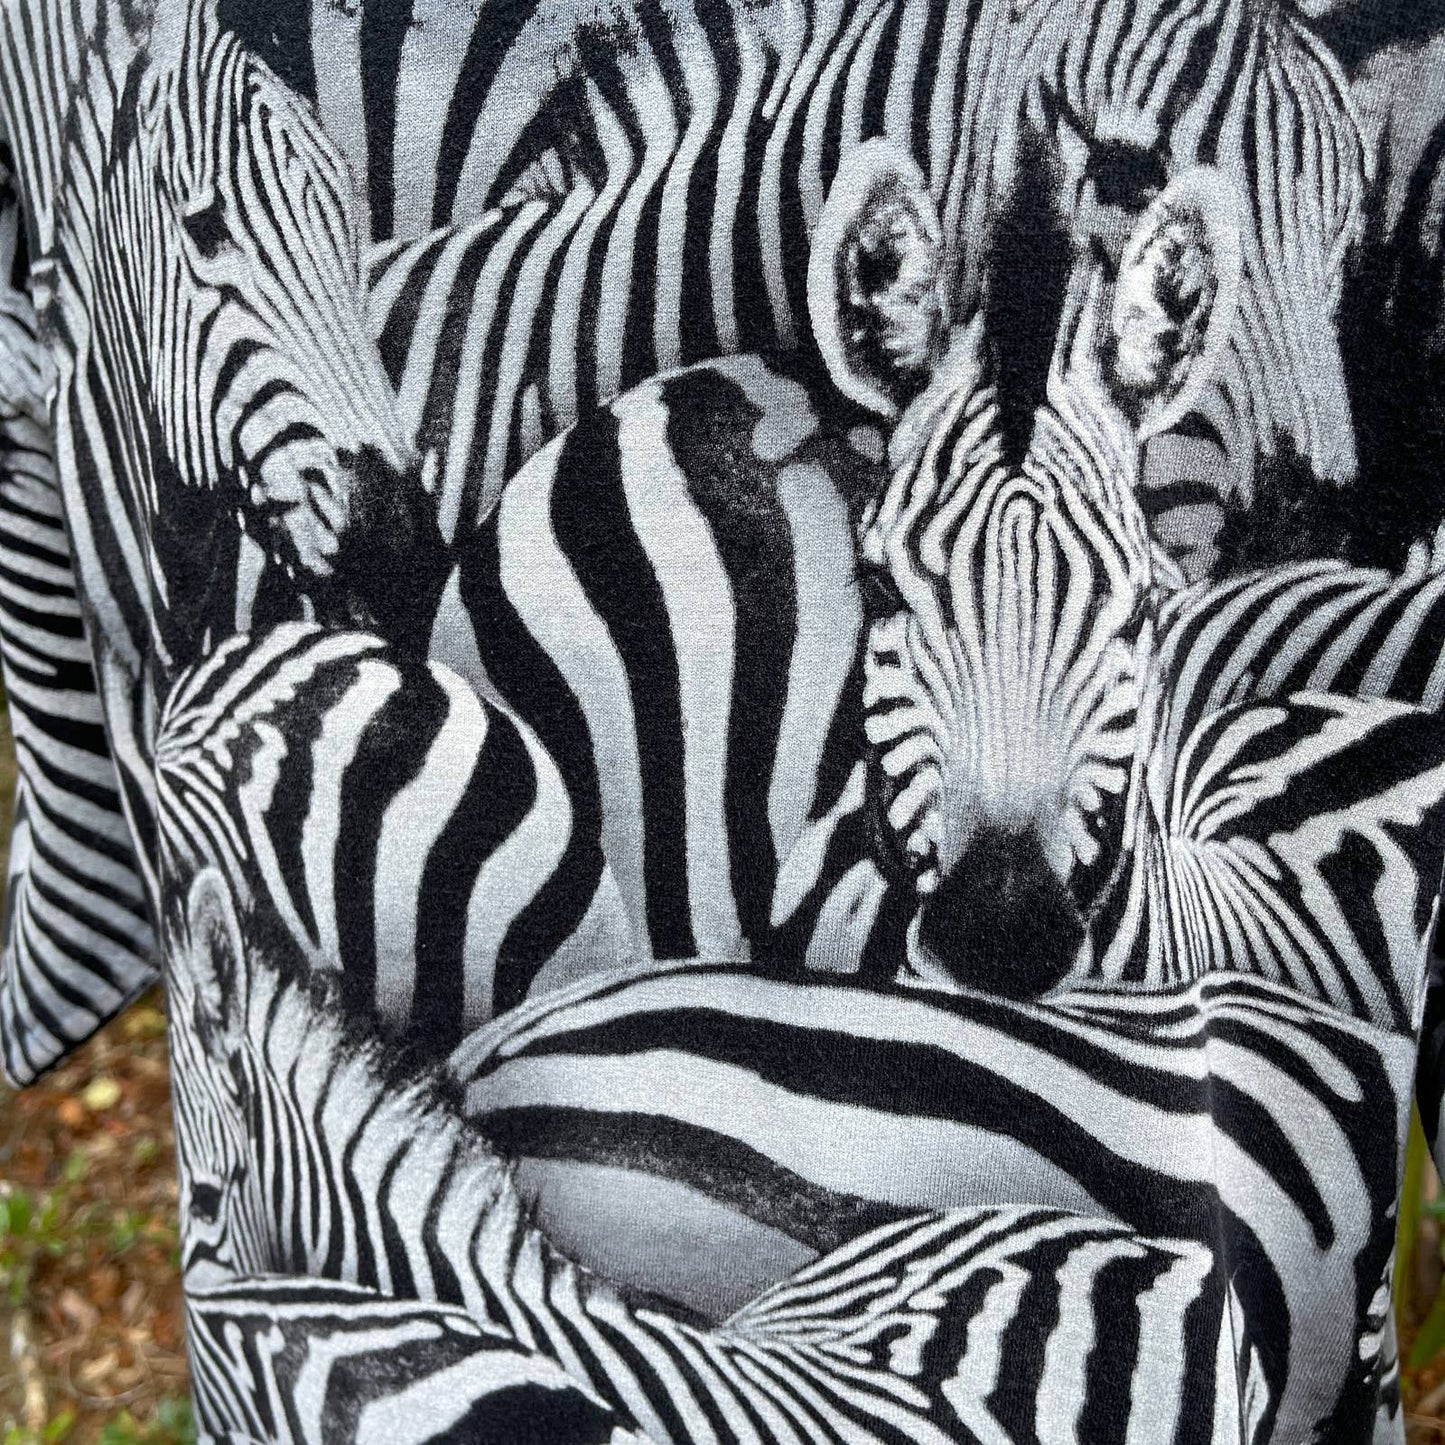 Vintage 90s Zebra Tee Shirt Black White Nature Short Sleeves Radical Nature L XL